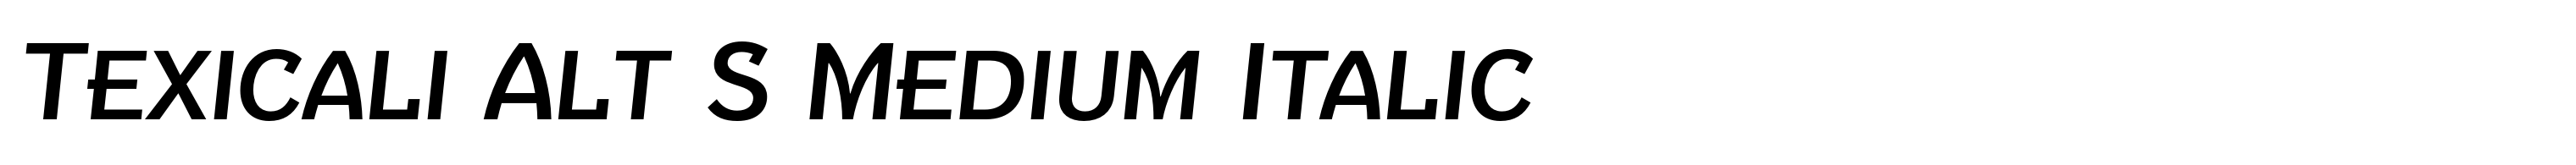 Texicali Alt S Medium Italic